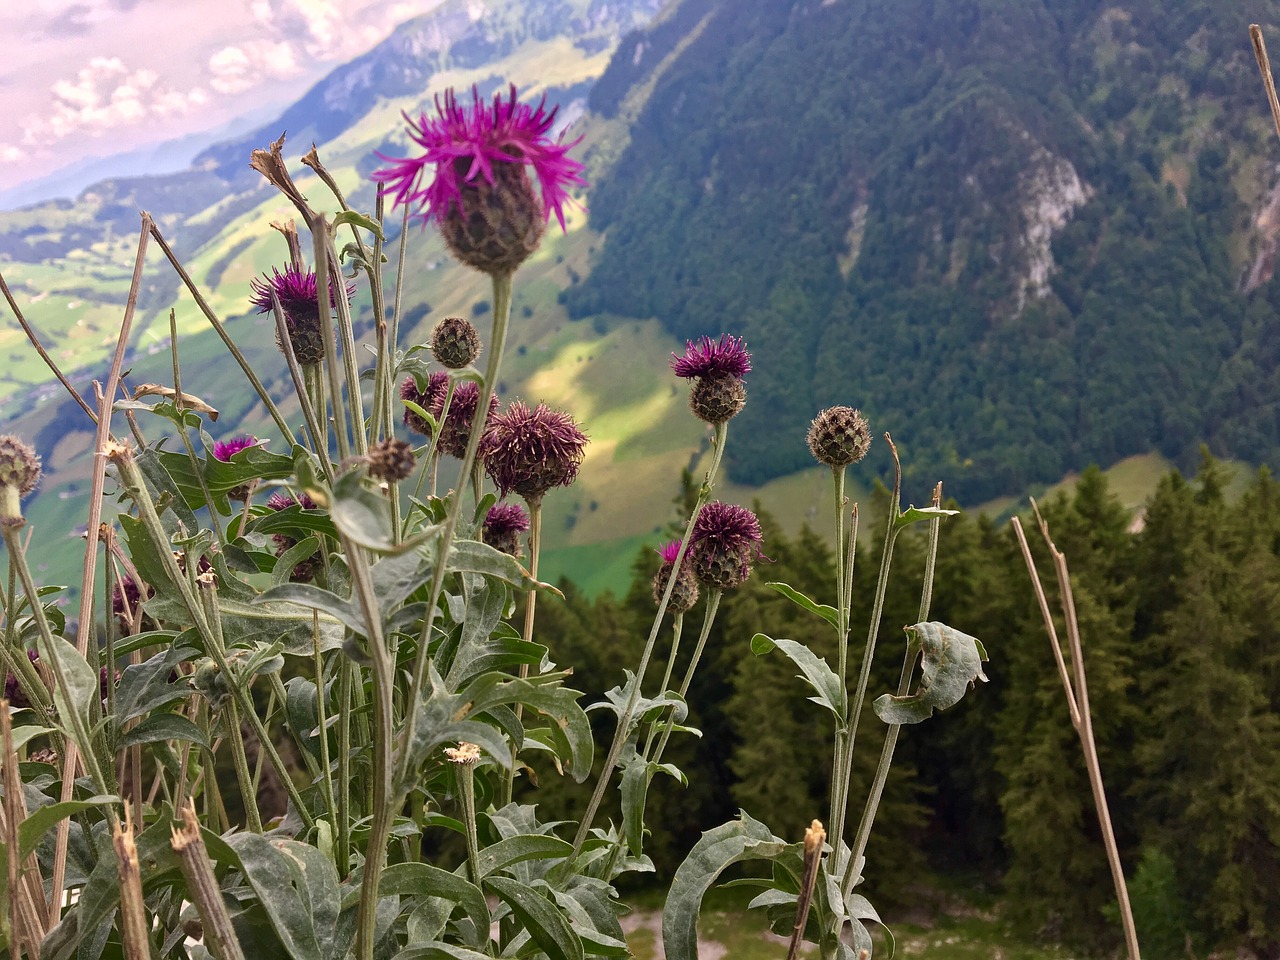 Gėlė,  Pobūdį,  Vasara,  Augalų,  Dangus,  Laukas,  Kraštovaizdis,  Aescher,  Appenzell,  Appenzellerland